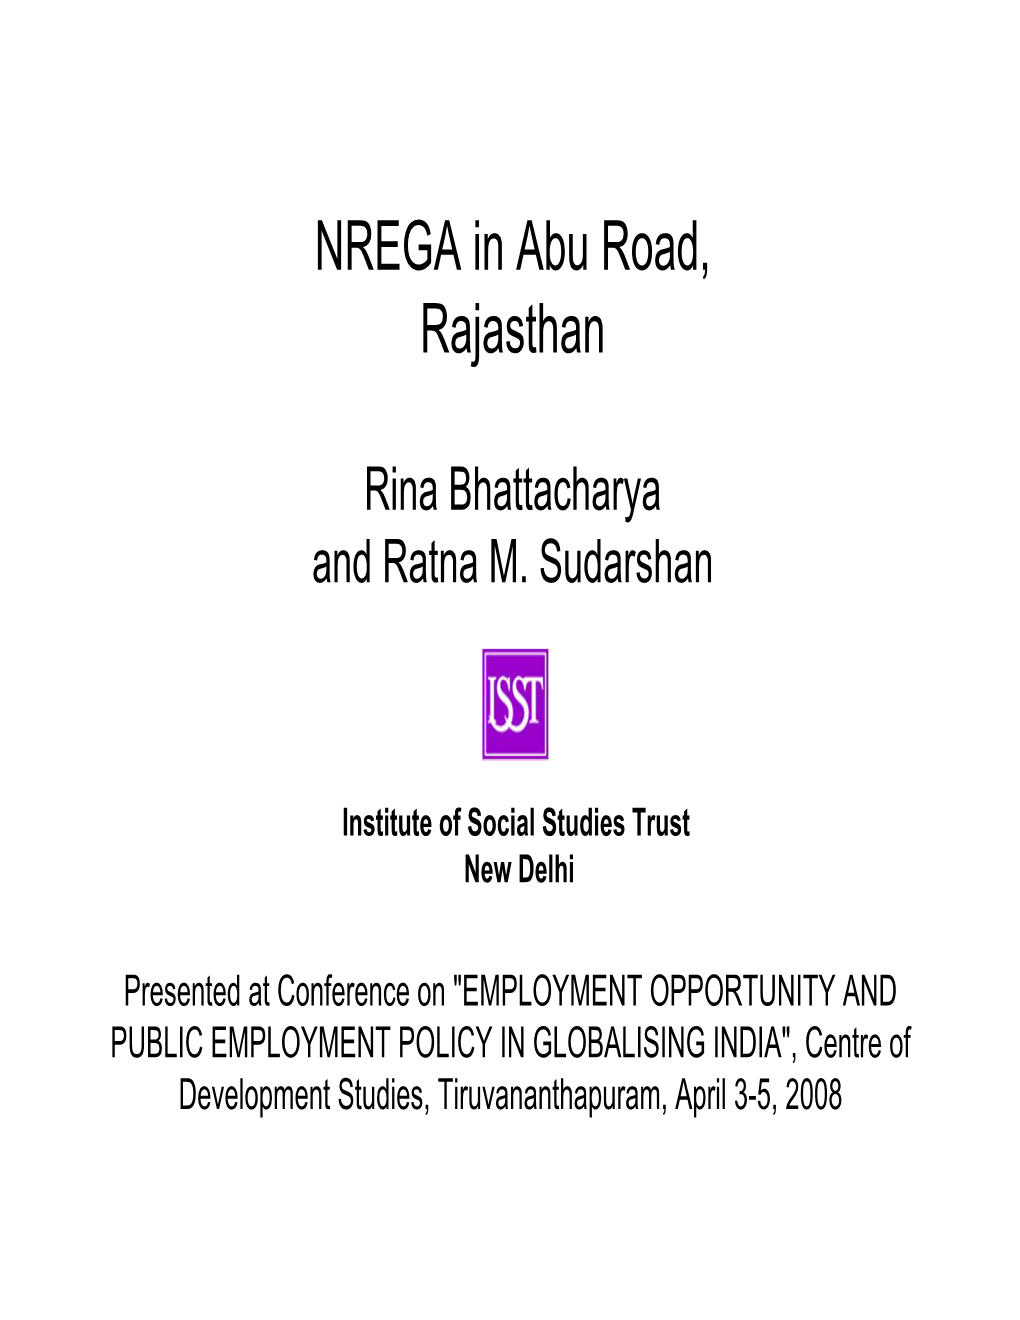 NREGA in Abu Road, Rajasthan